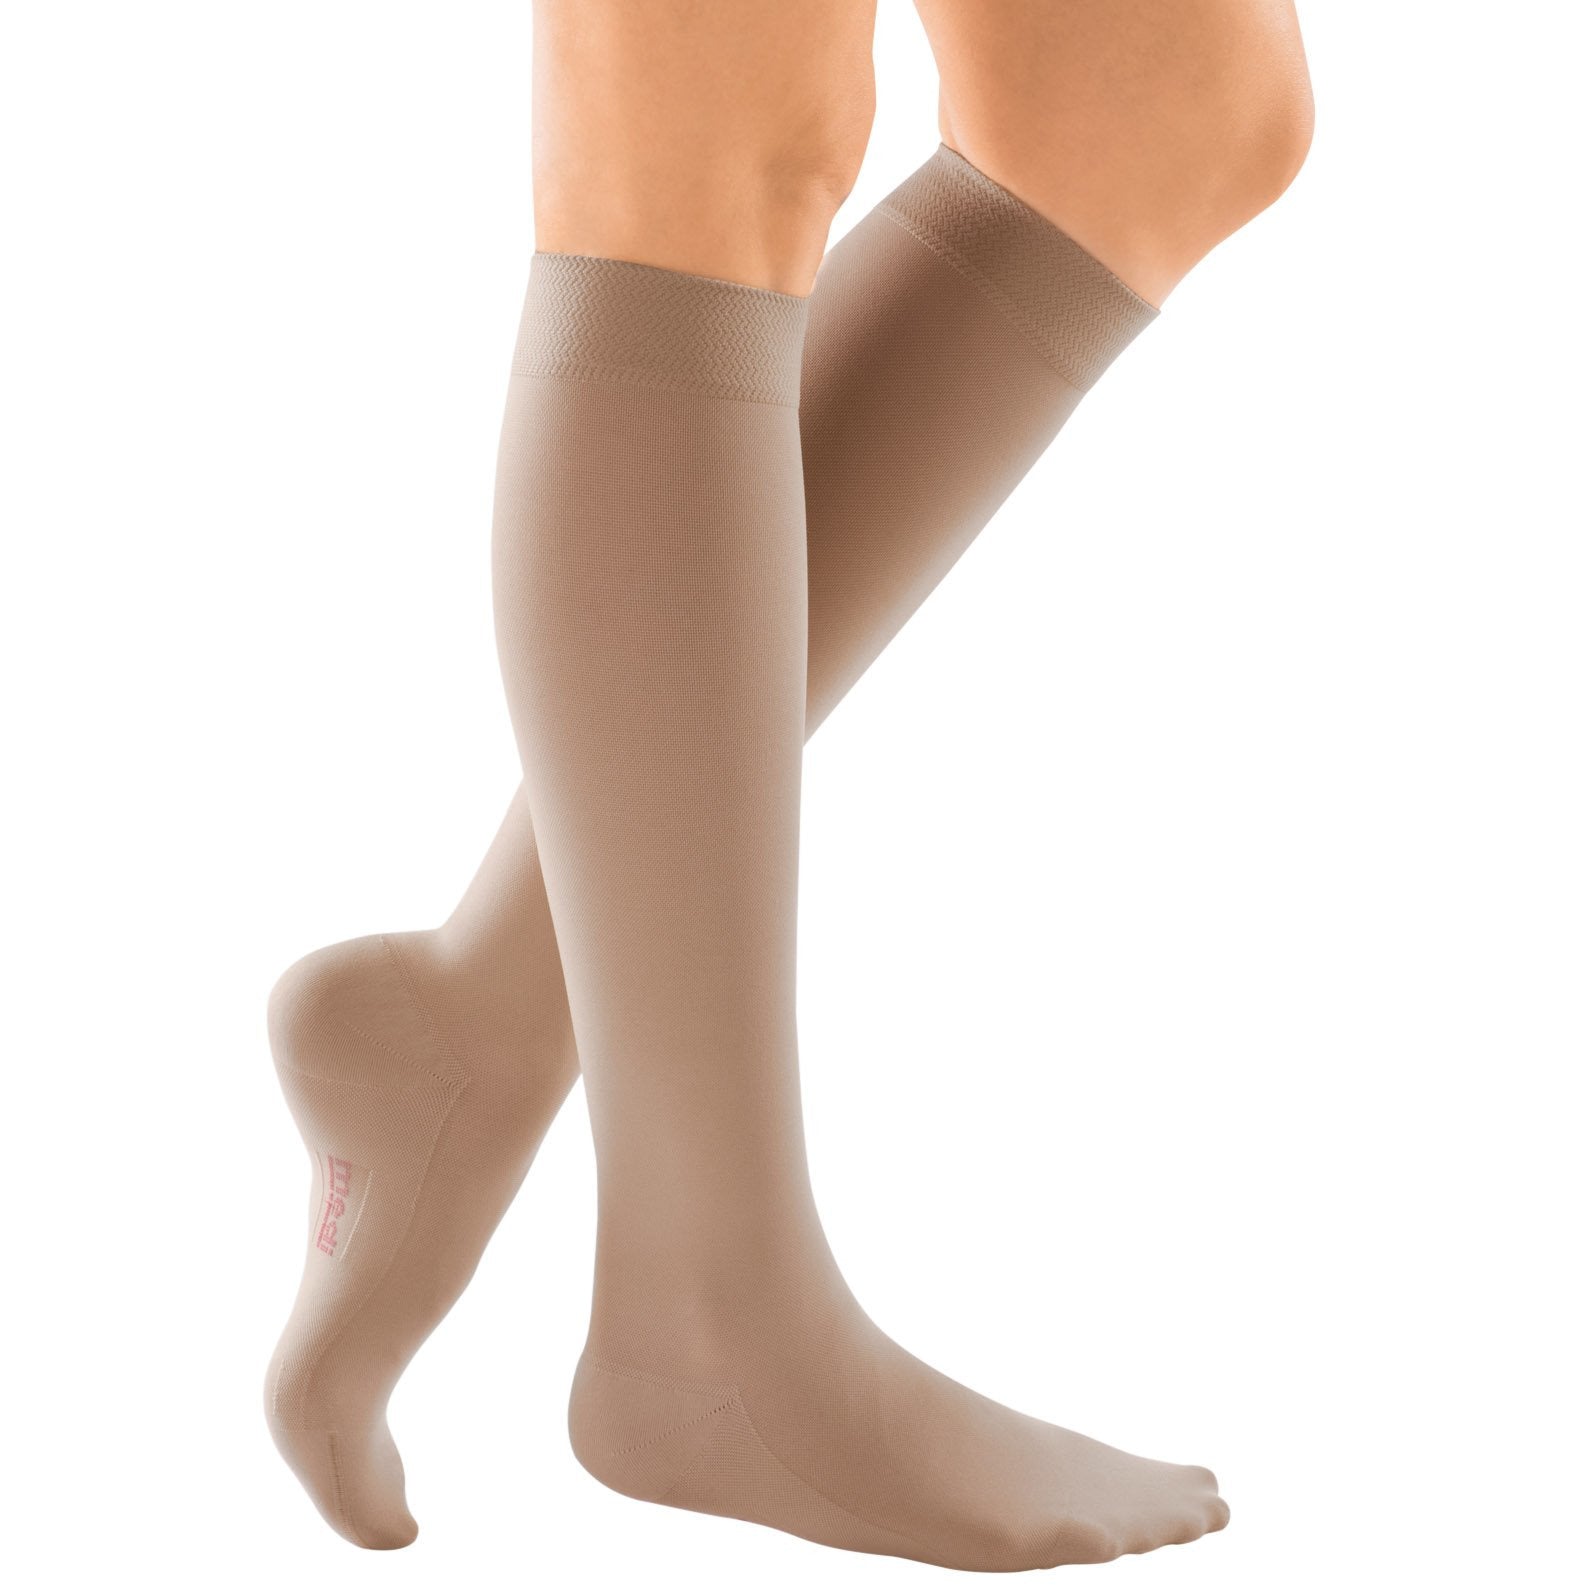 Women's Everyday Compression Socks (15-20mmHg)